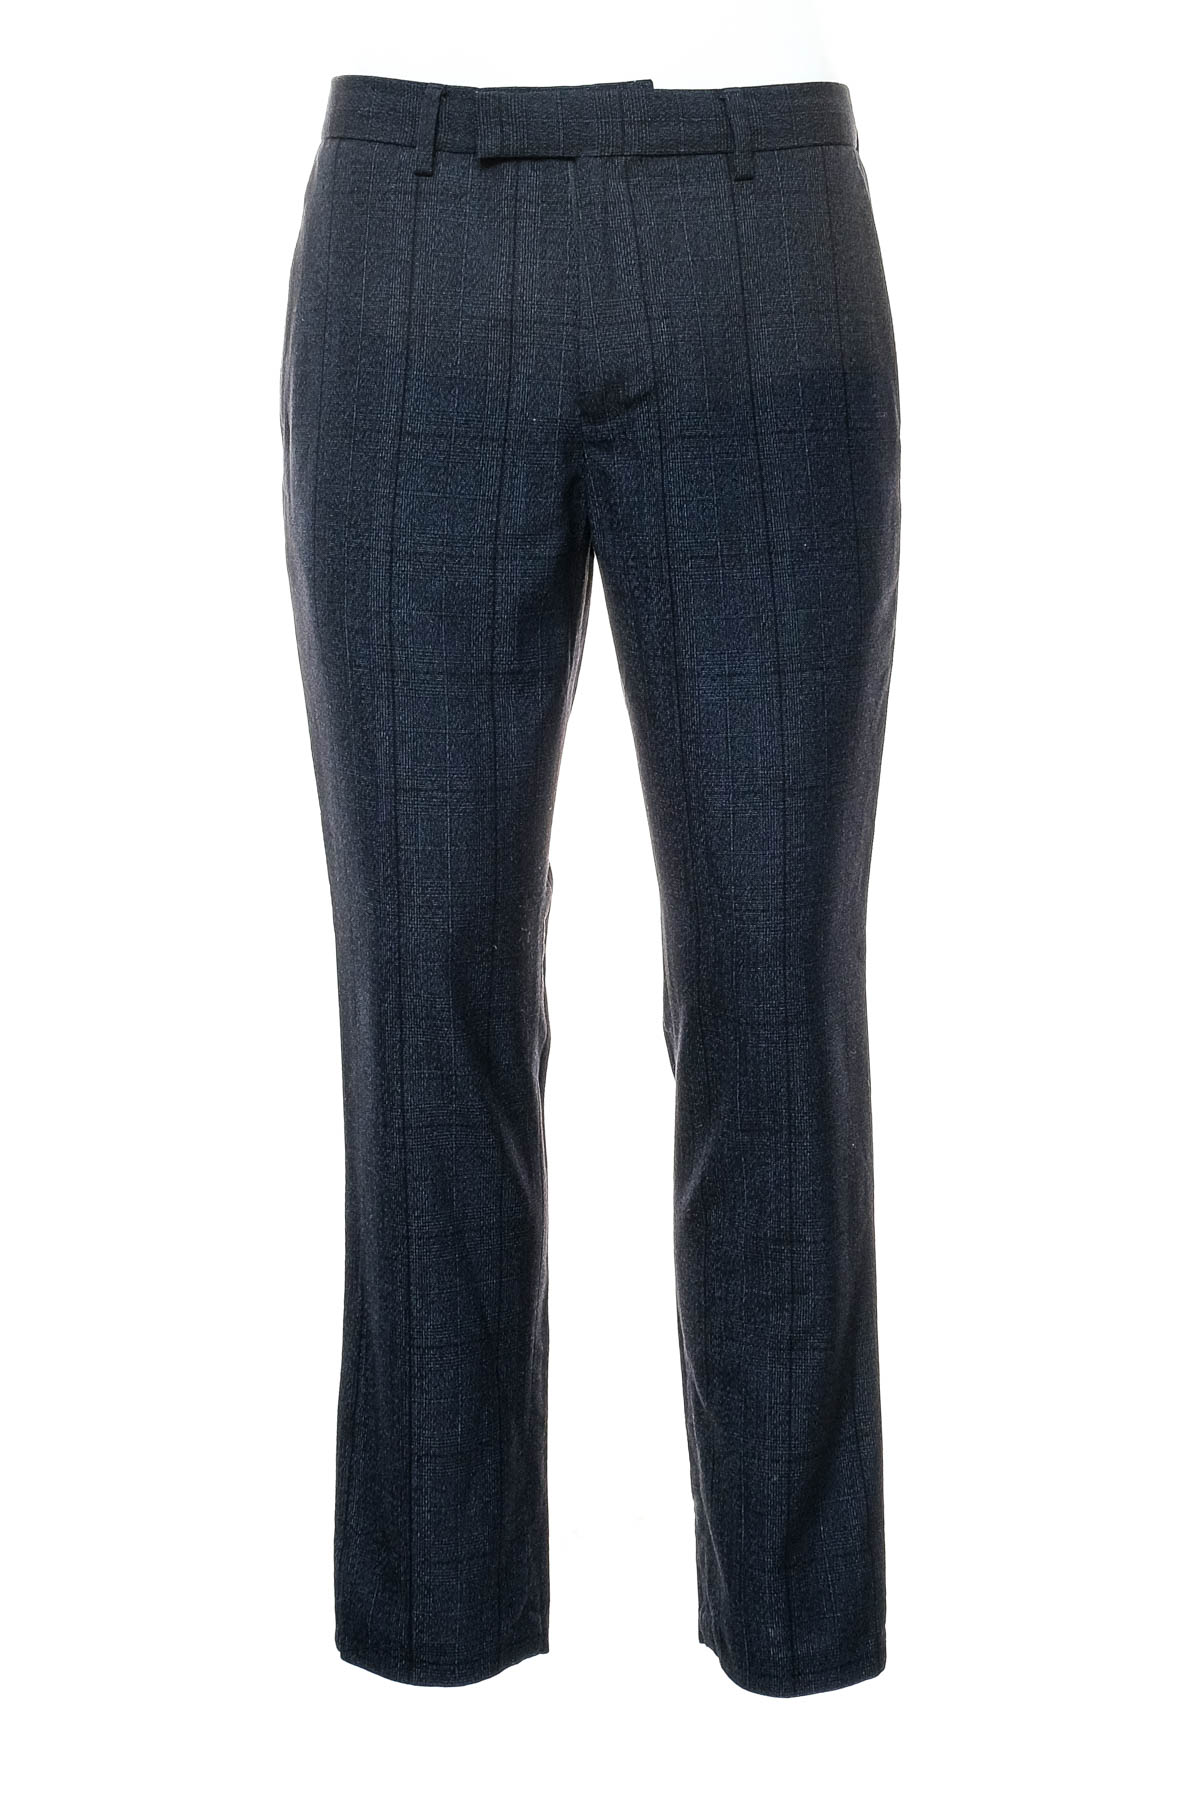 Men's trousers - PRIMARK - 0